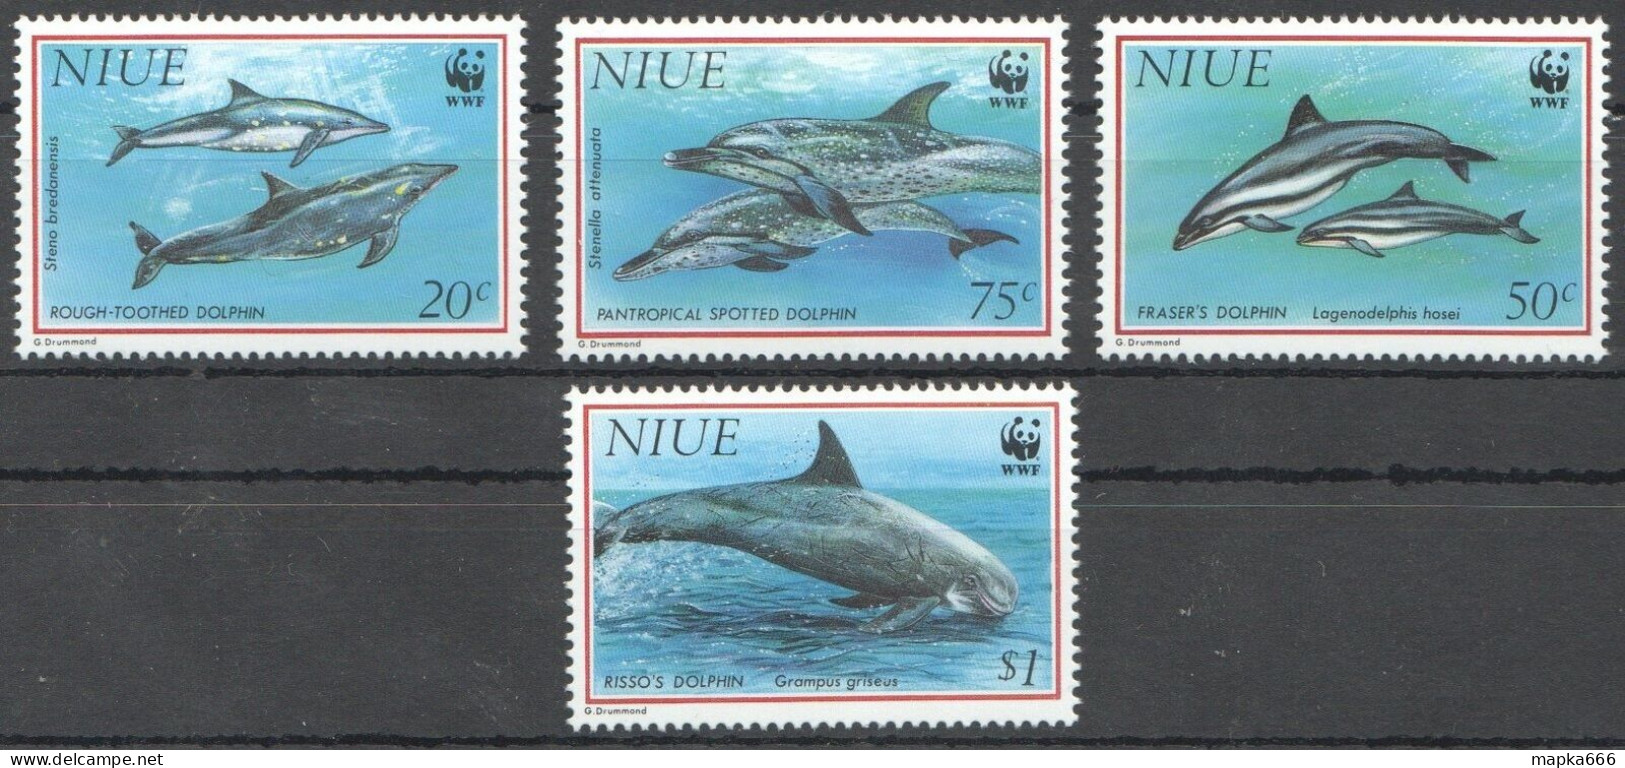 Ft124 1993 Niue Wwf Dolphins Fish & Marine Life #822-25 Michel 16 Euro 1Set Mnh - Meereswelt